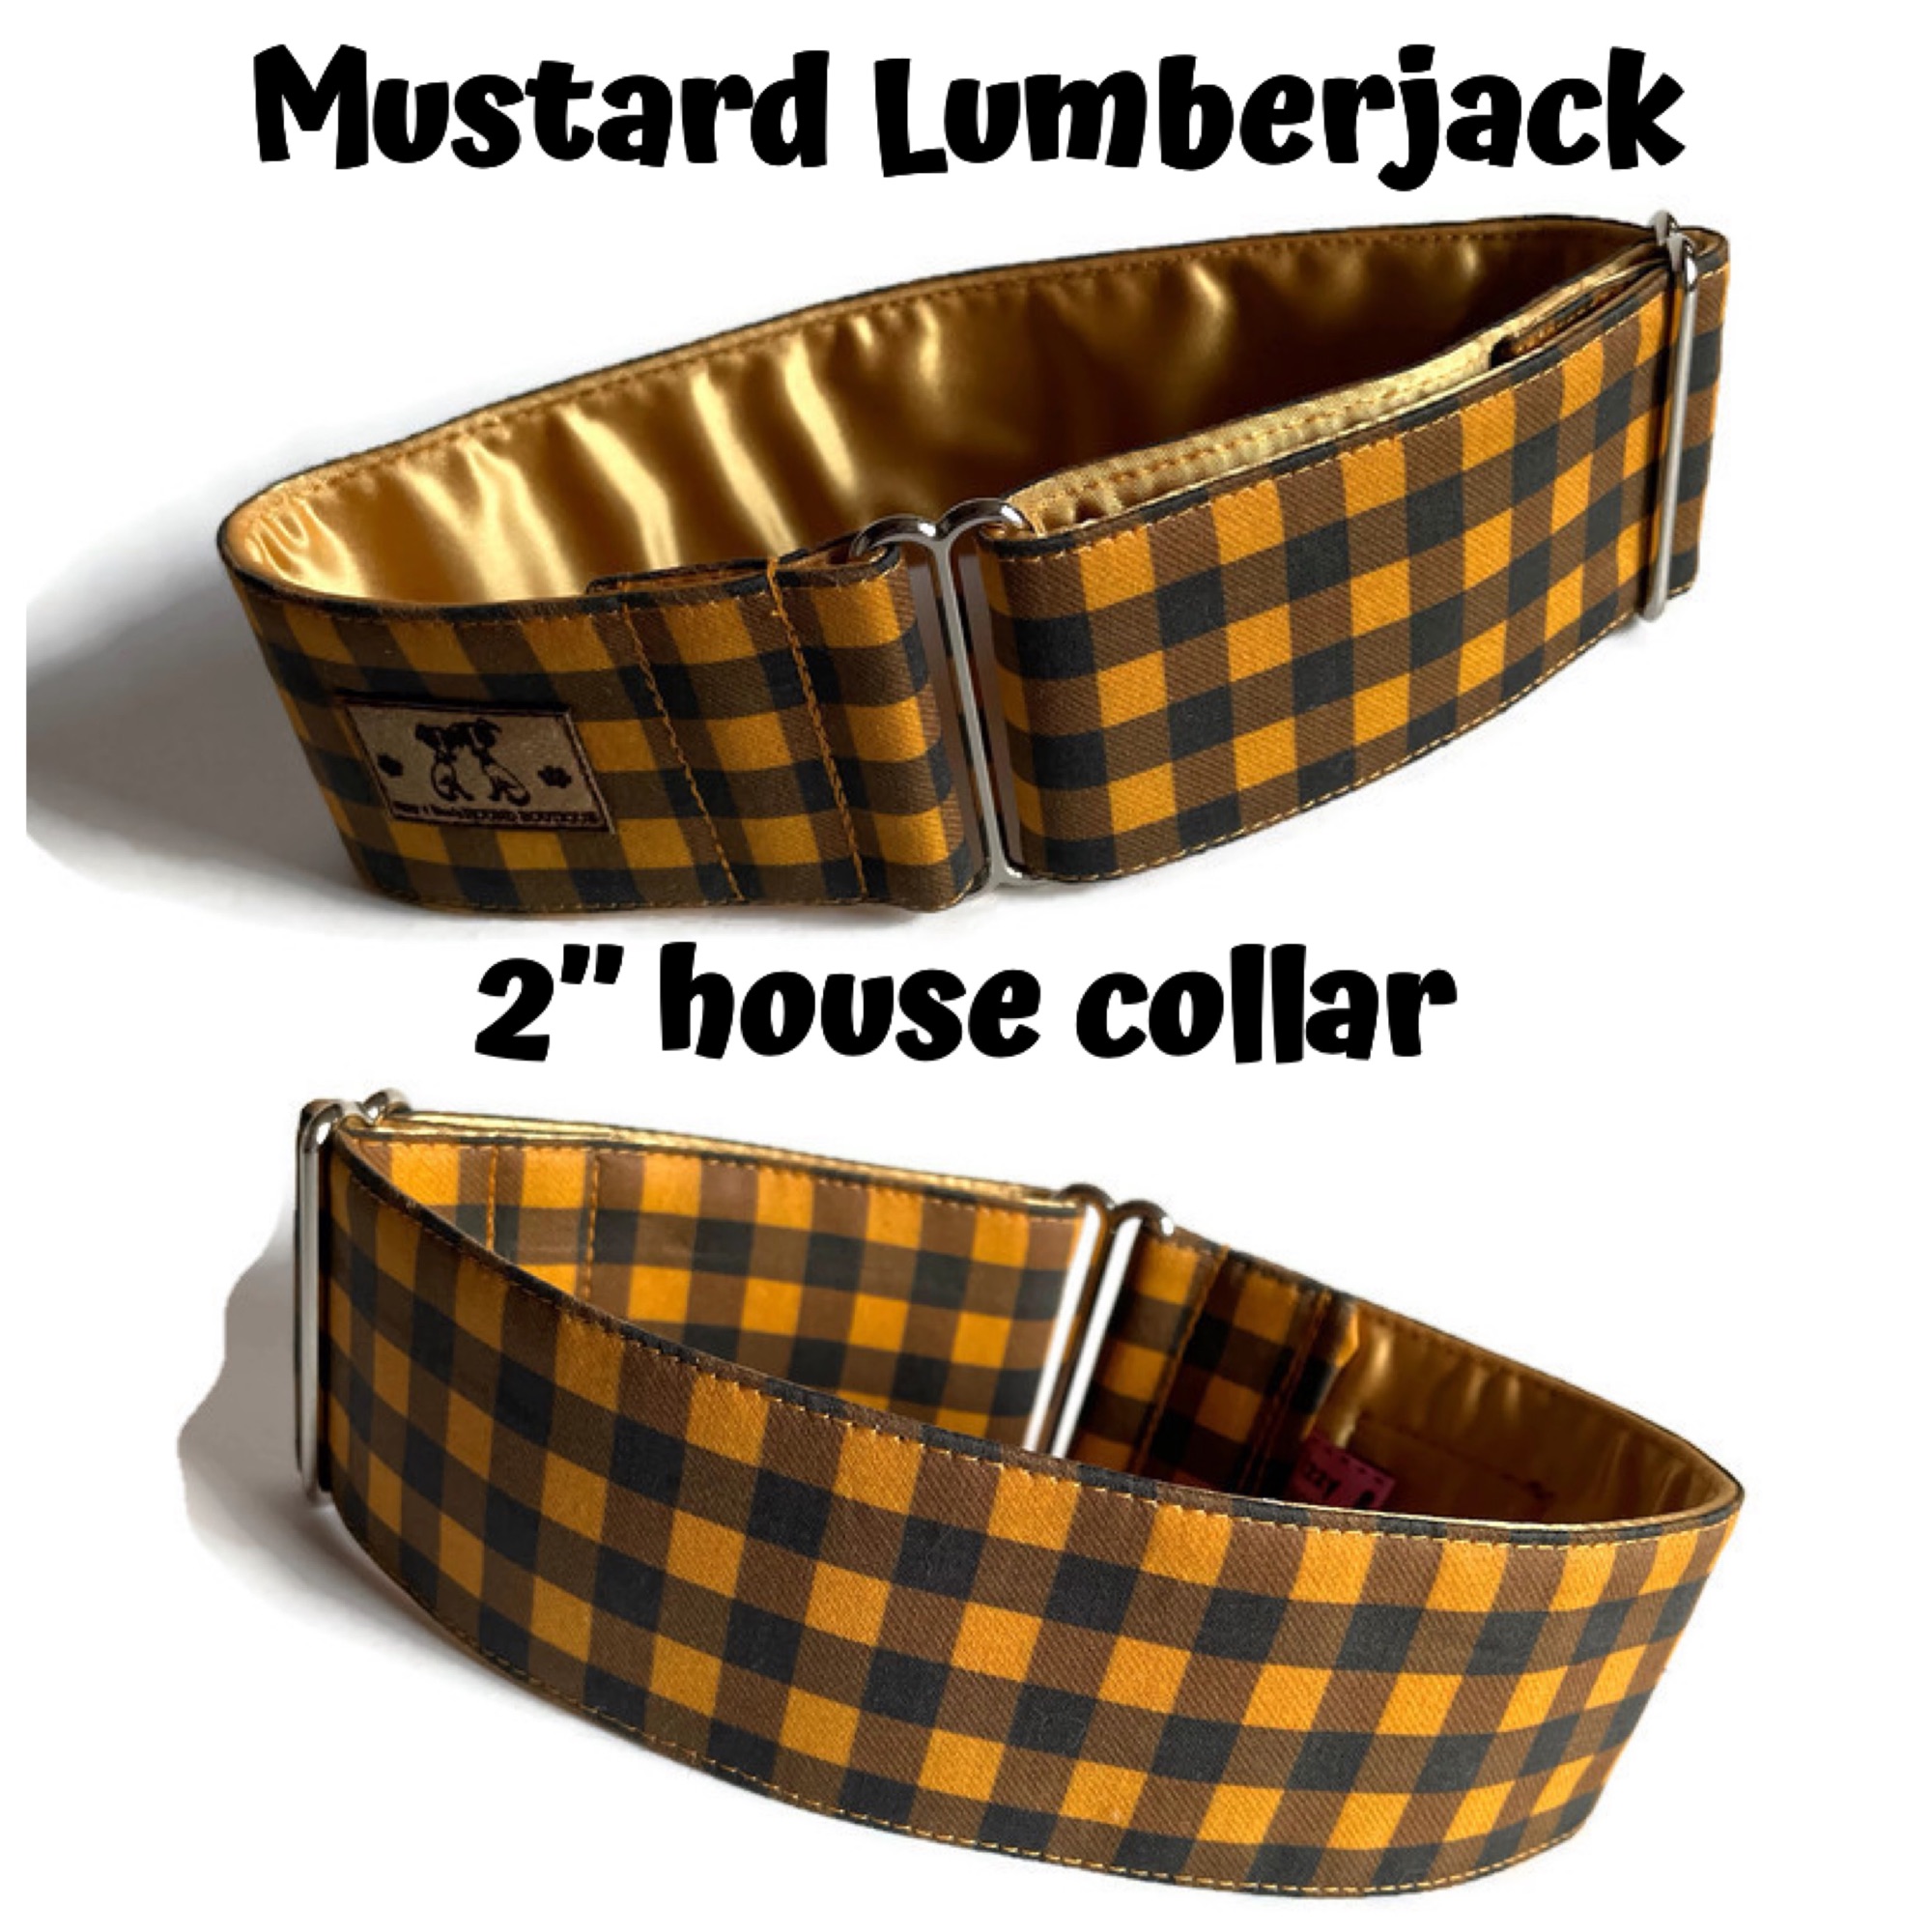 Mustard Lumberjack collar